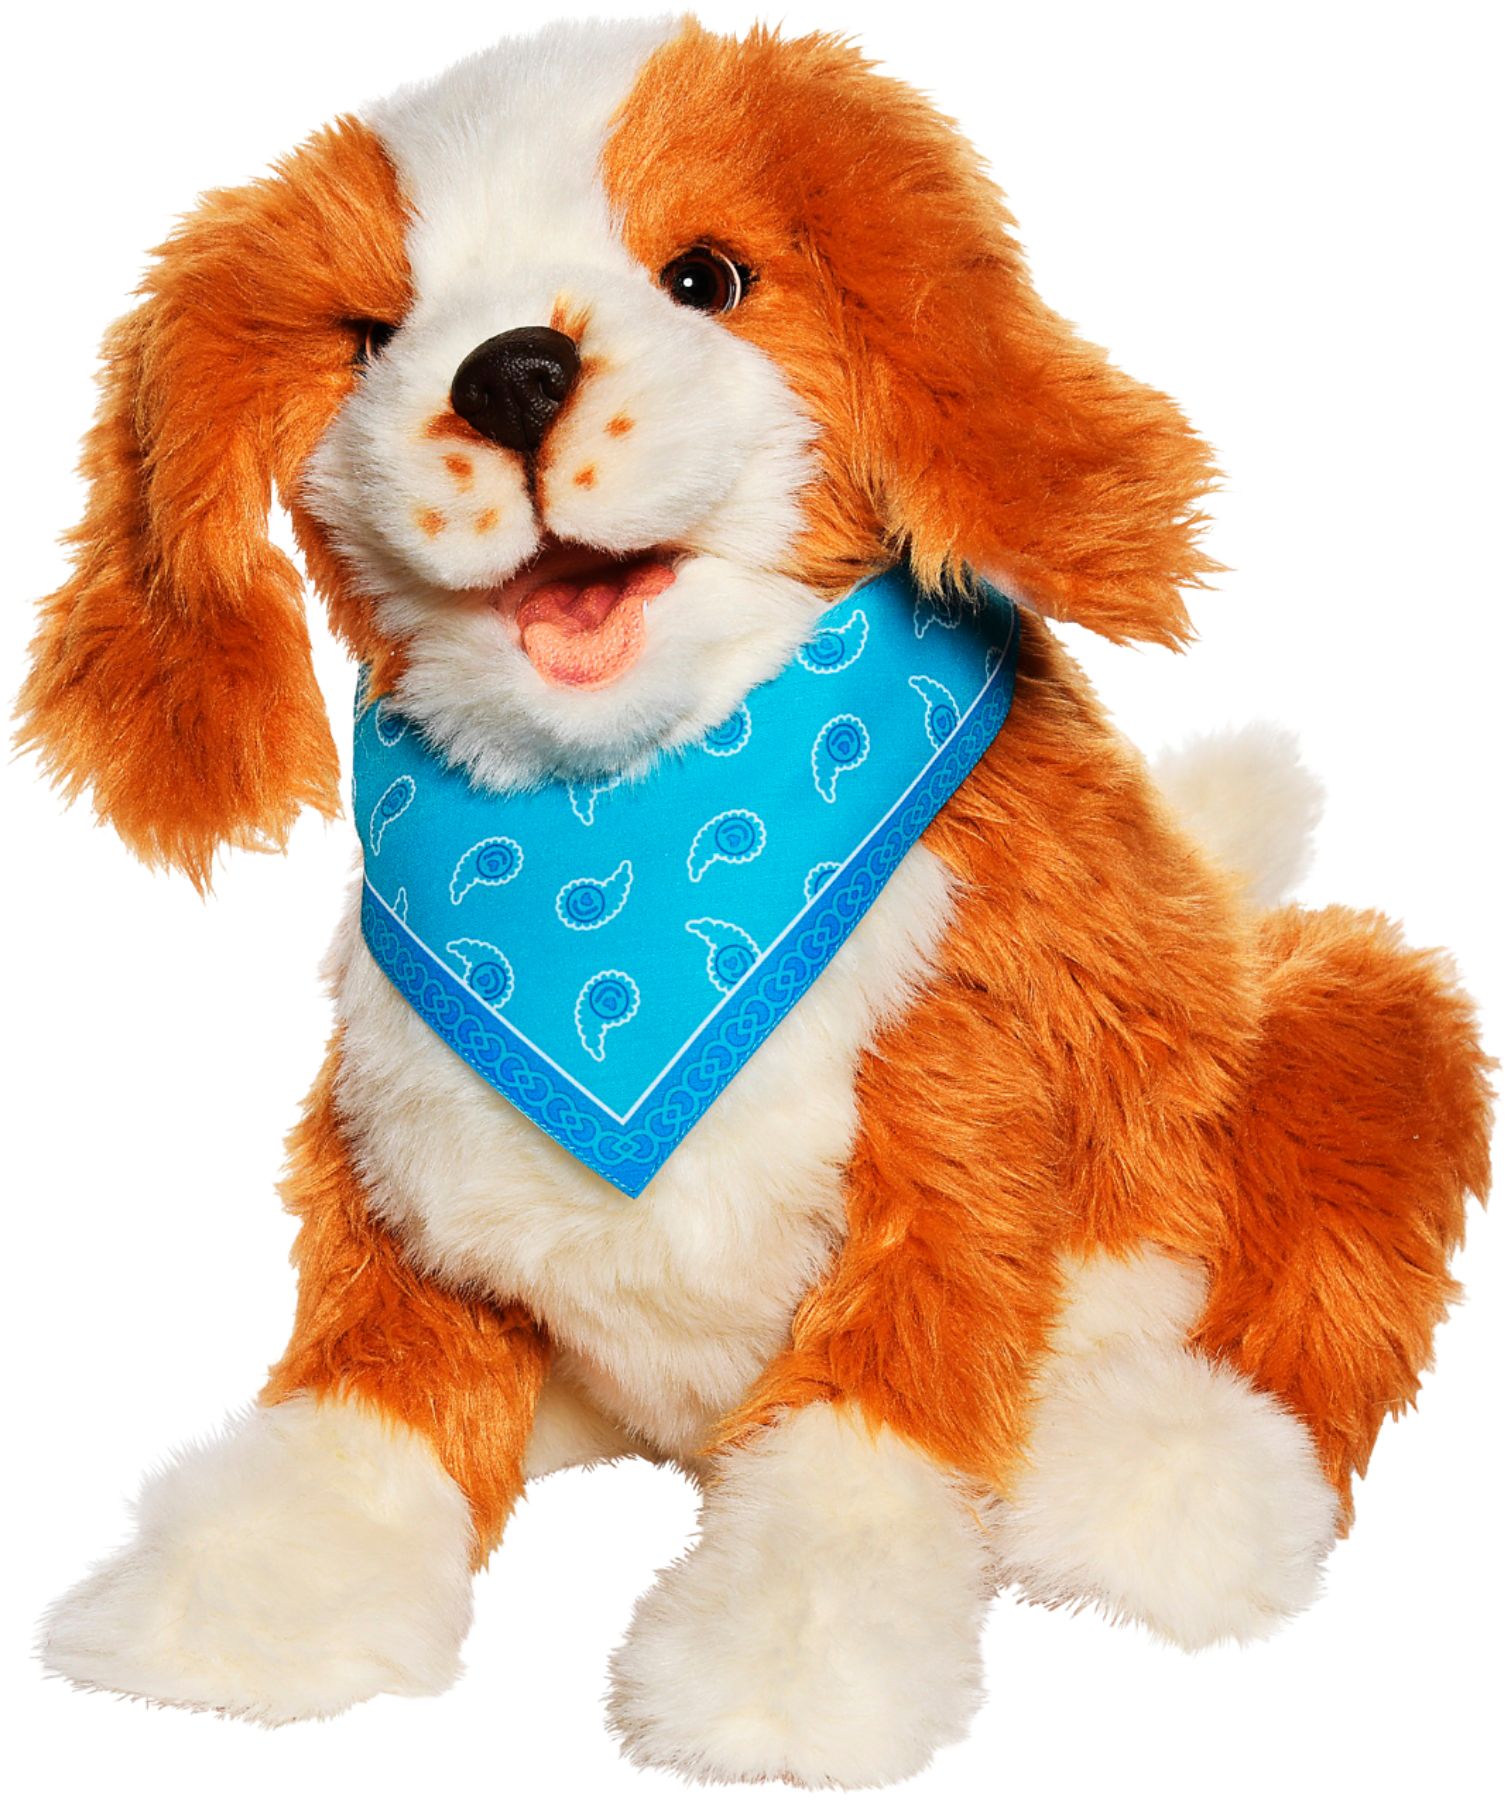 Joy for All Companion Pet Pup Brown A91105L00 - Best Buy